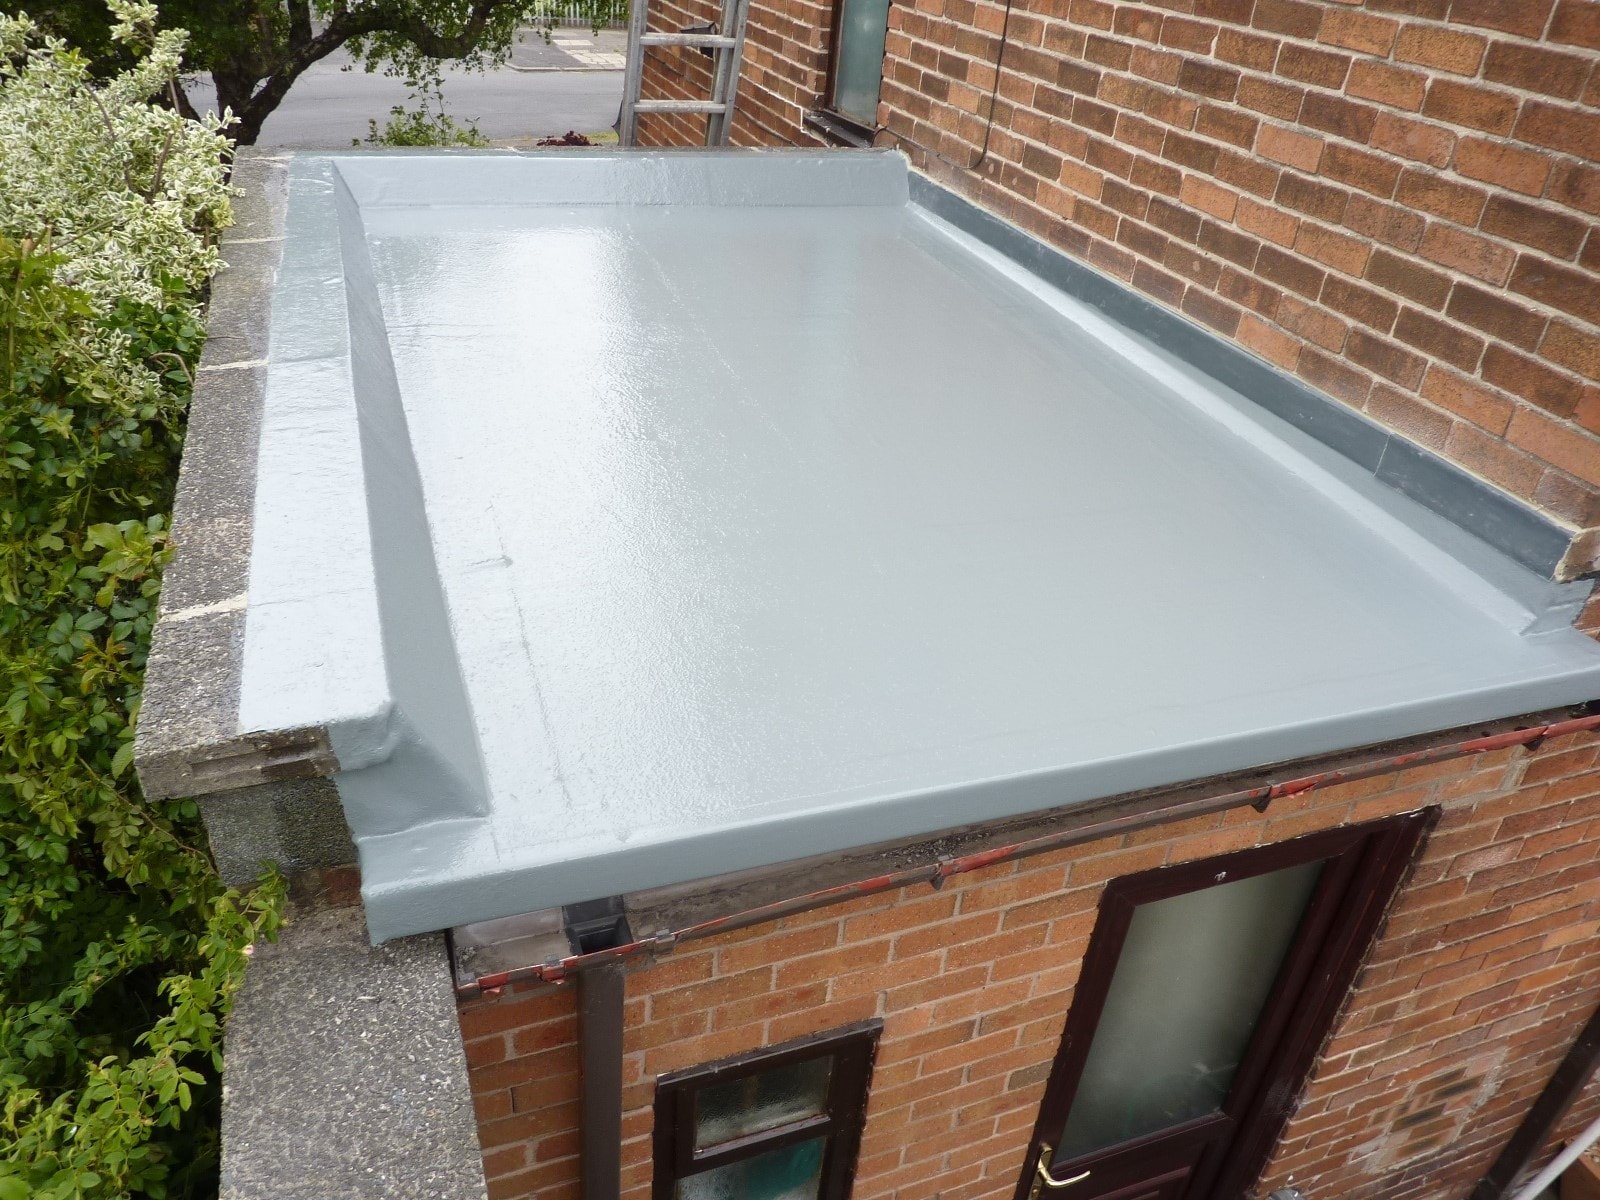 Why choose a fibreglass GRP flat roof?